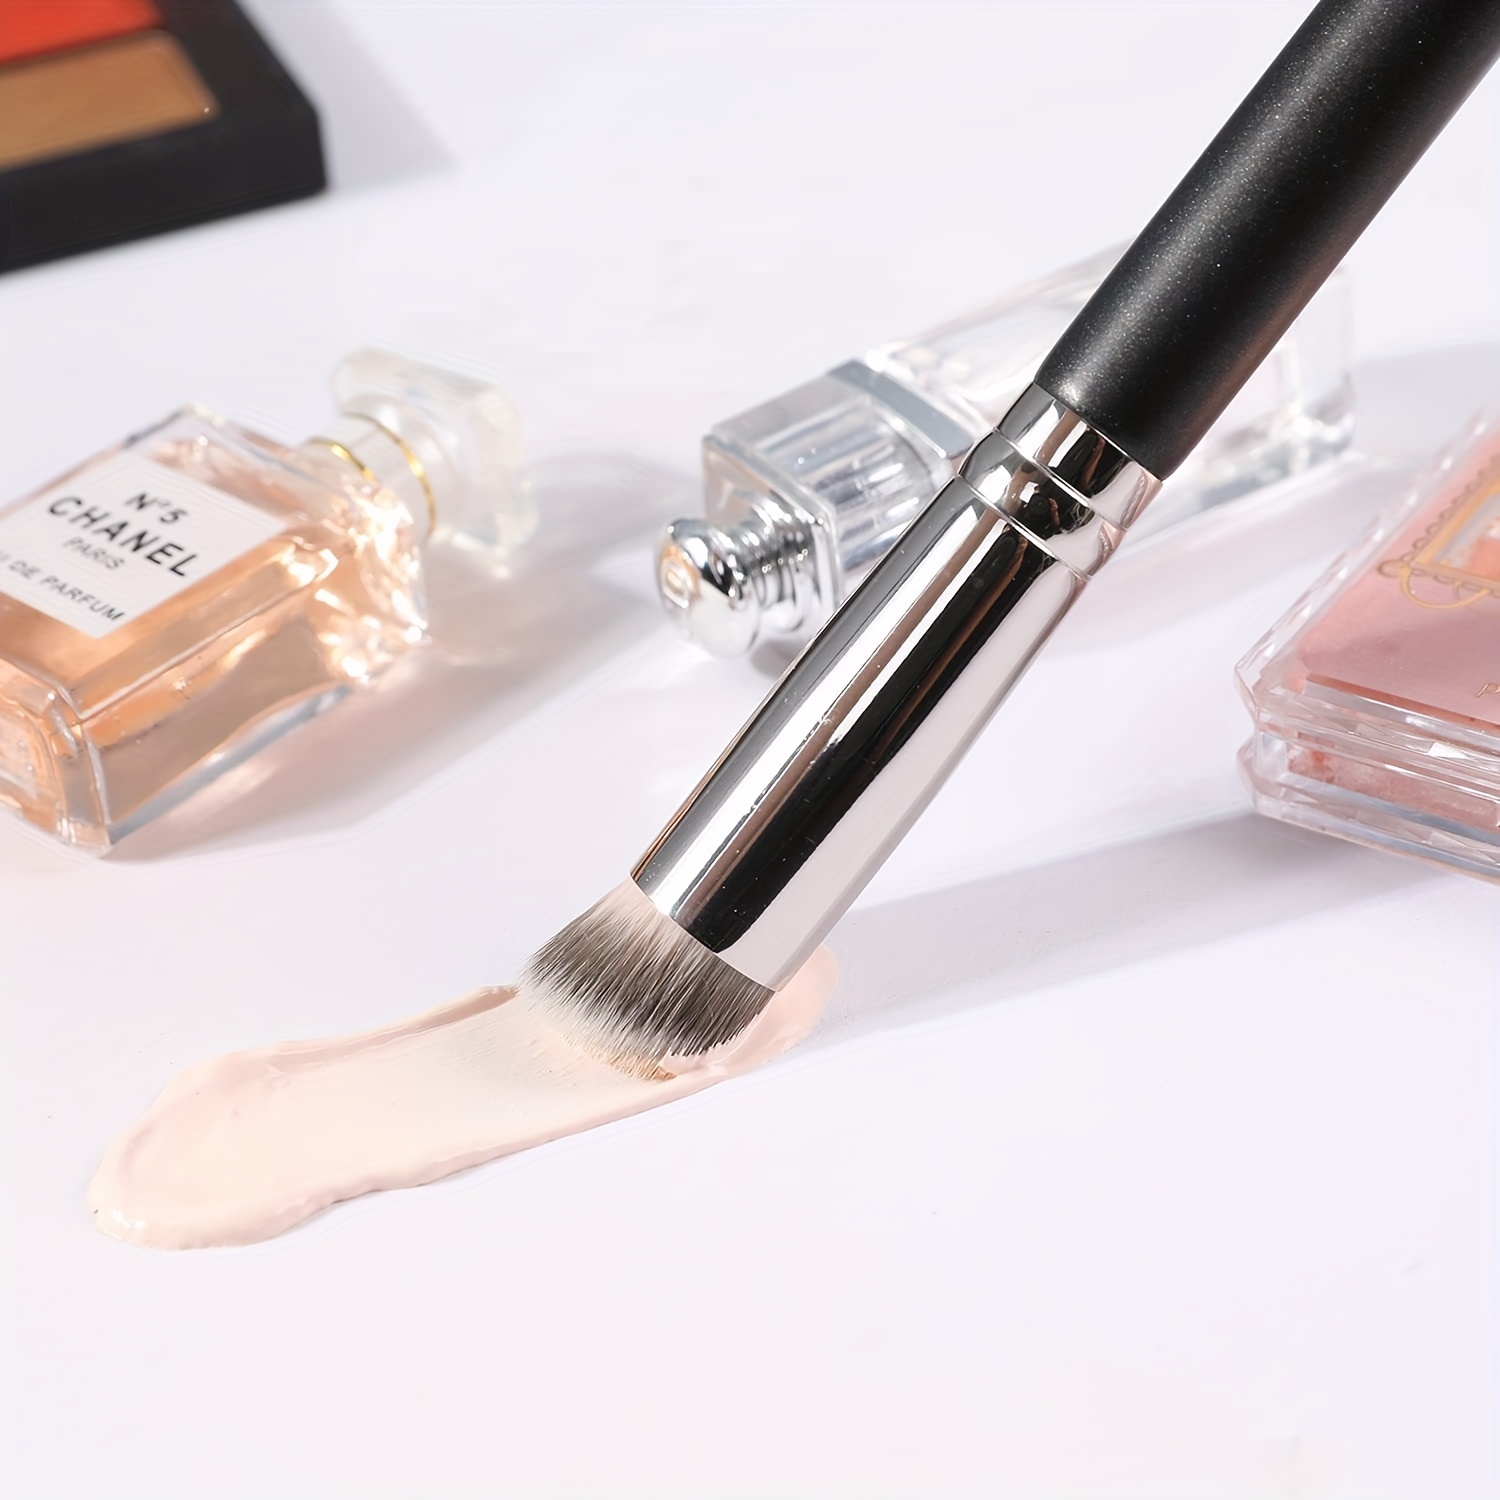 Chanel Smooth Makeup Sets